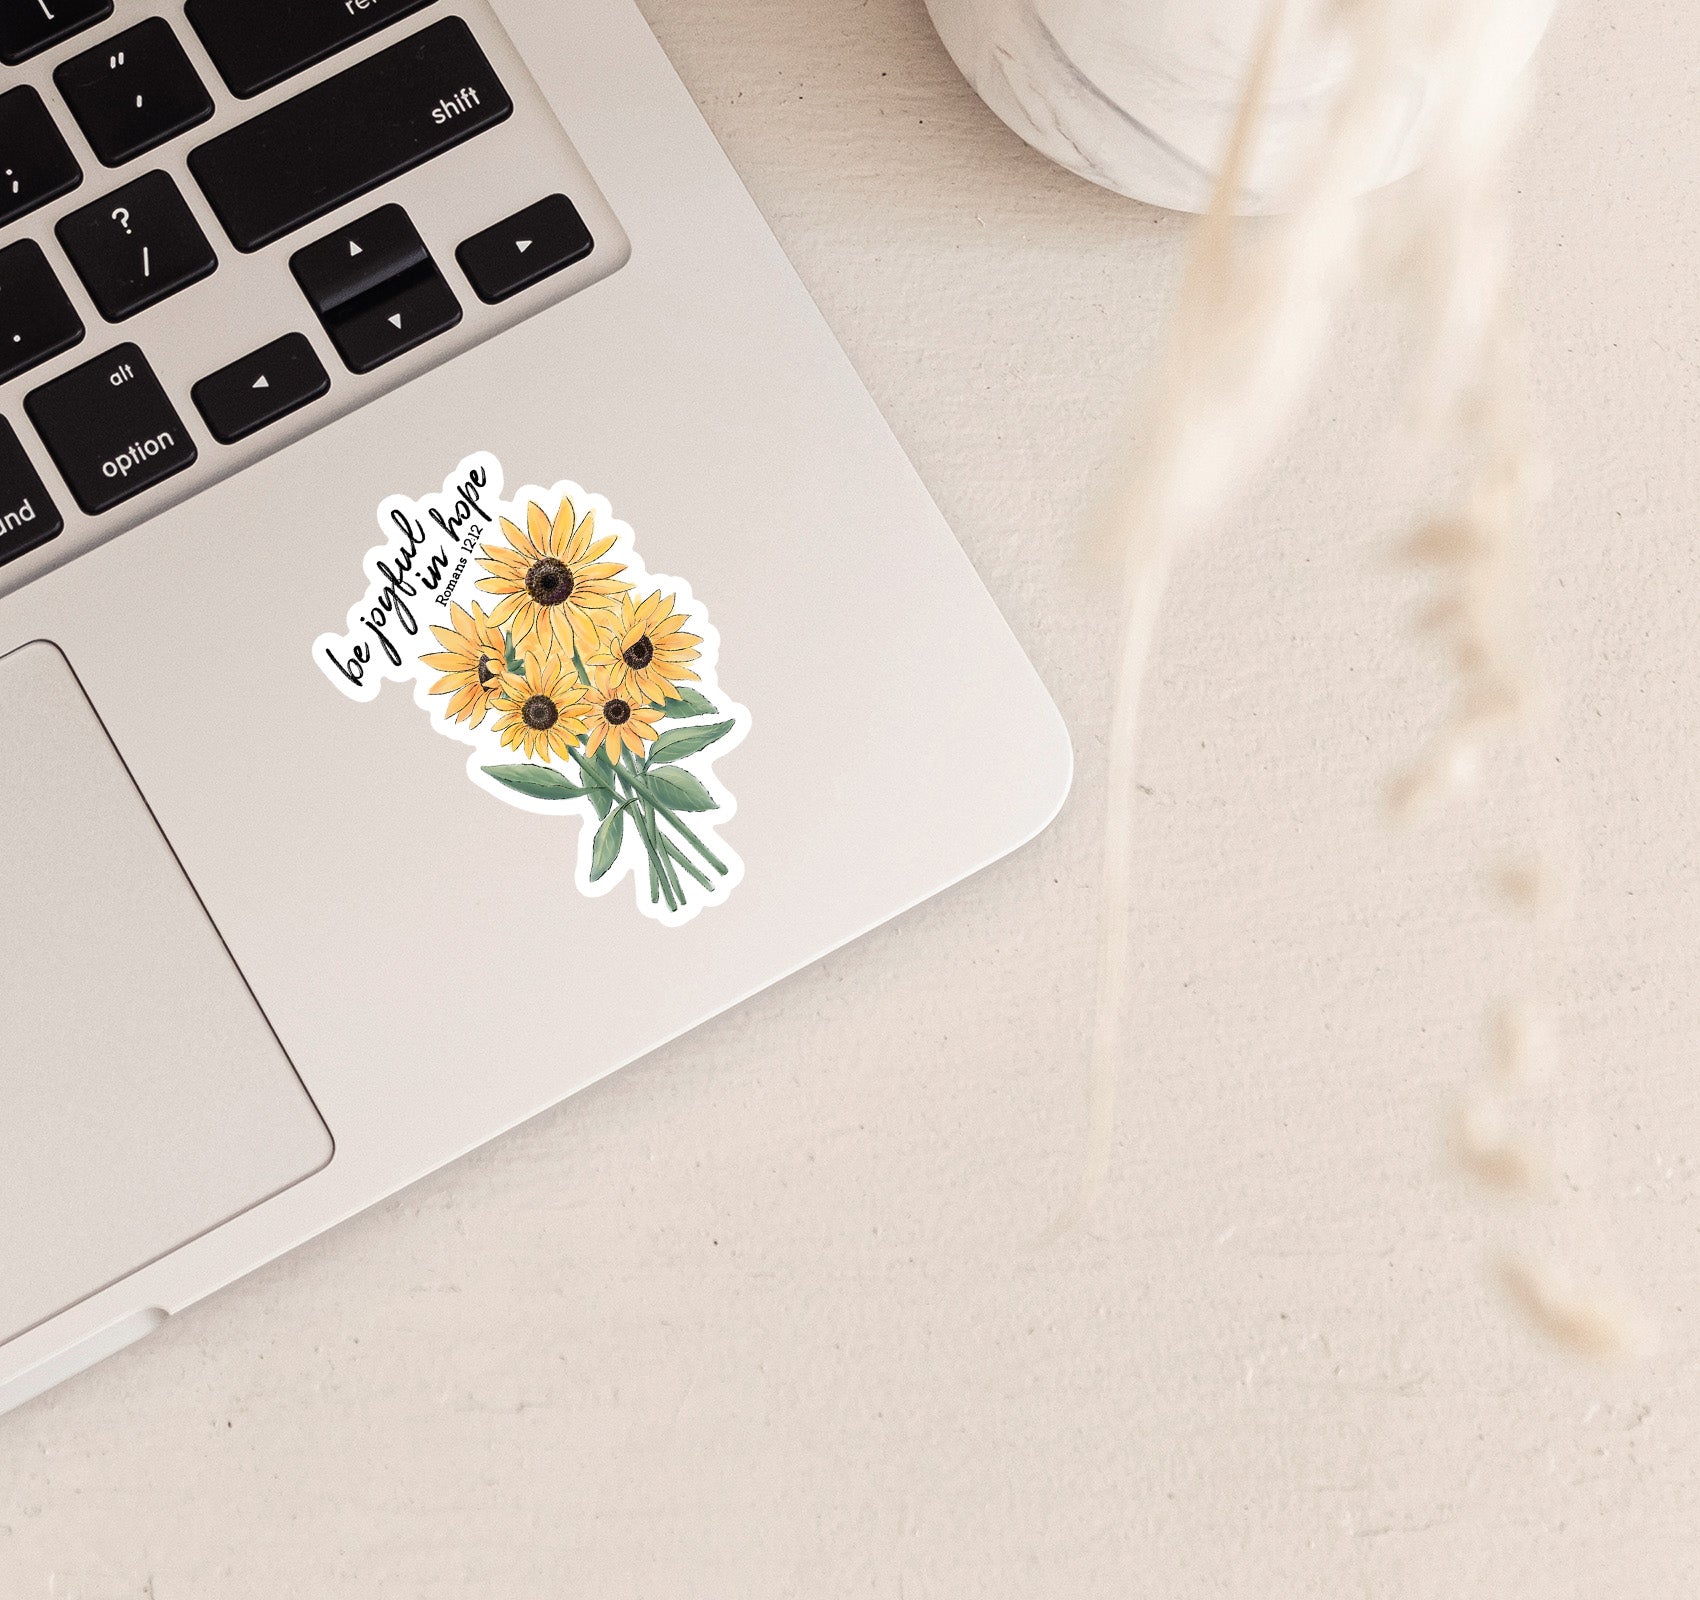 Be joyful in hope Christian laptop sticker with sunflowers